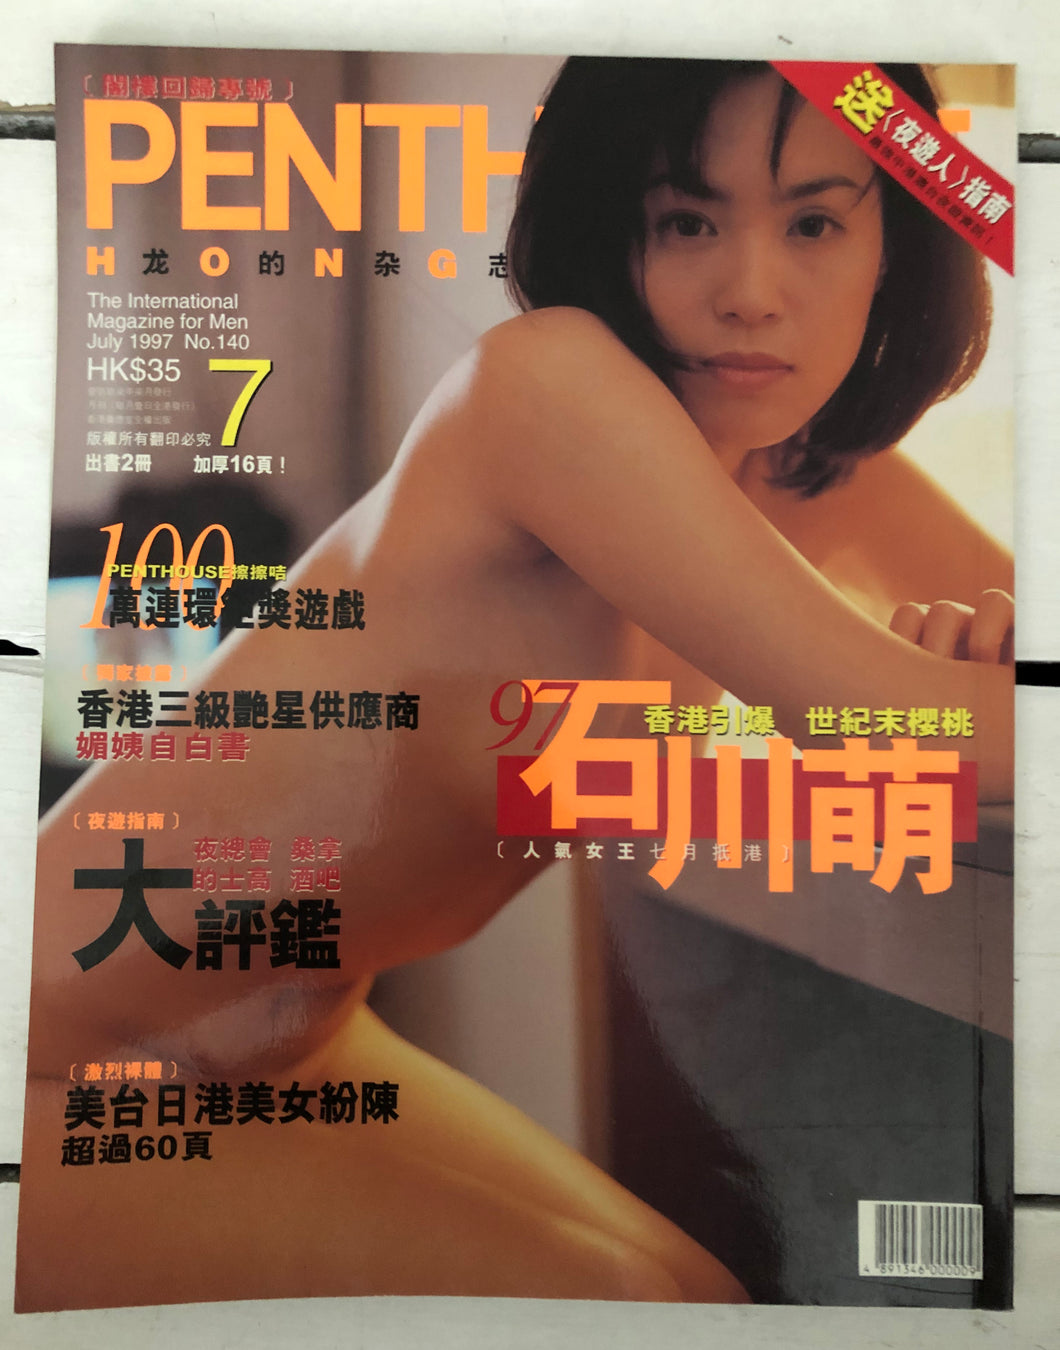 Penthouse Hong Kong July 1997